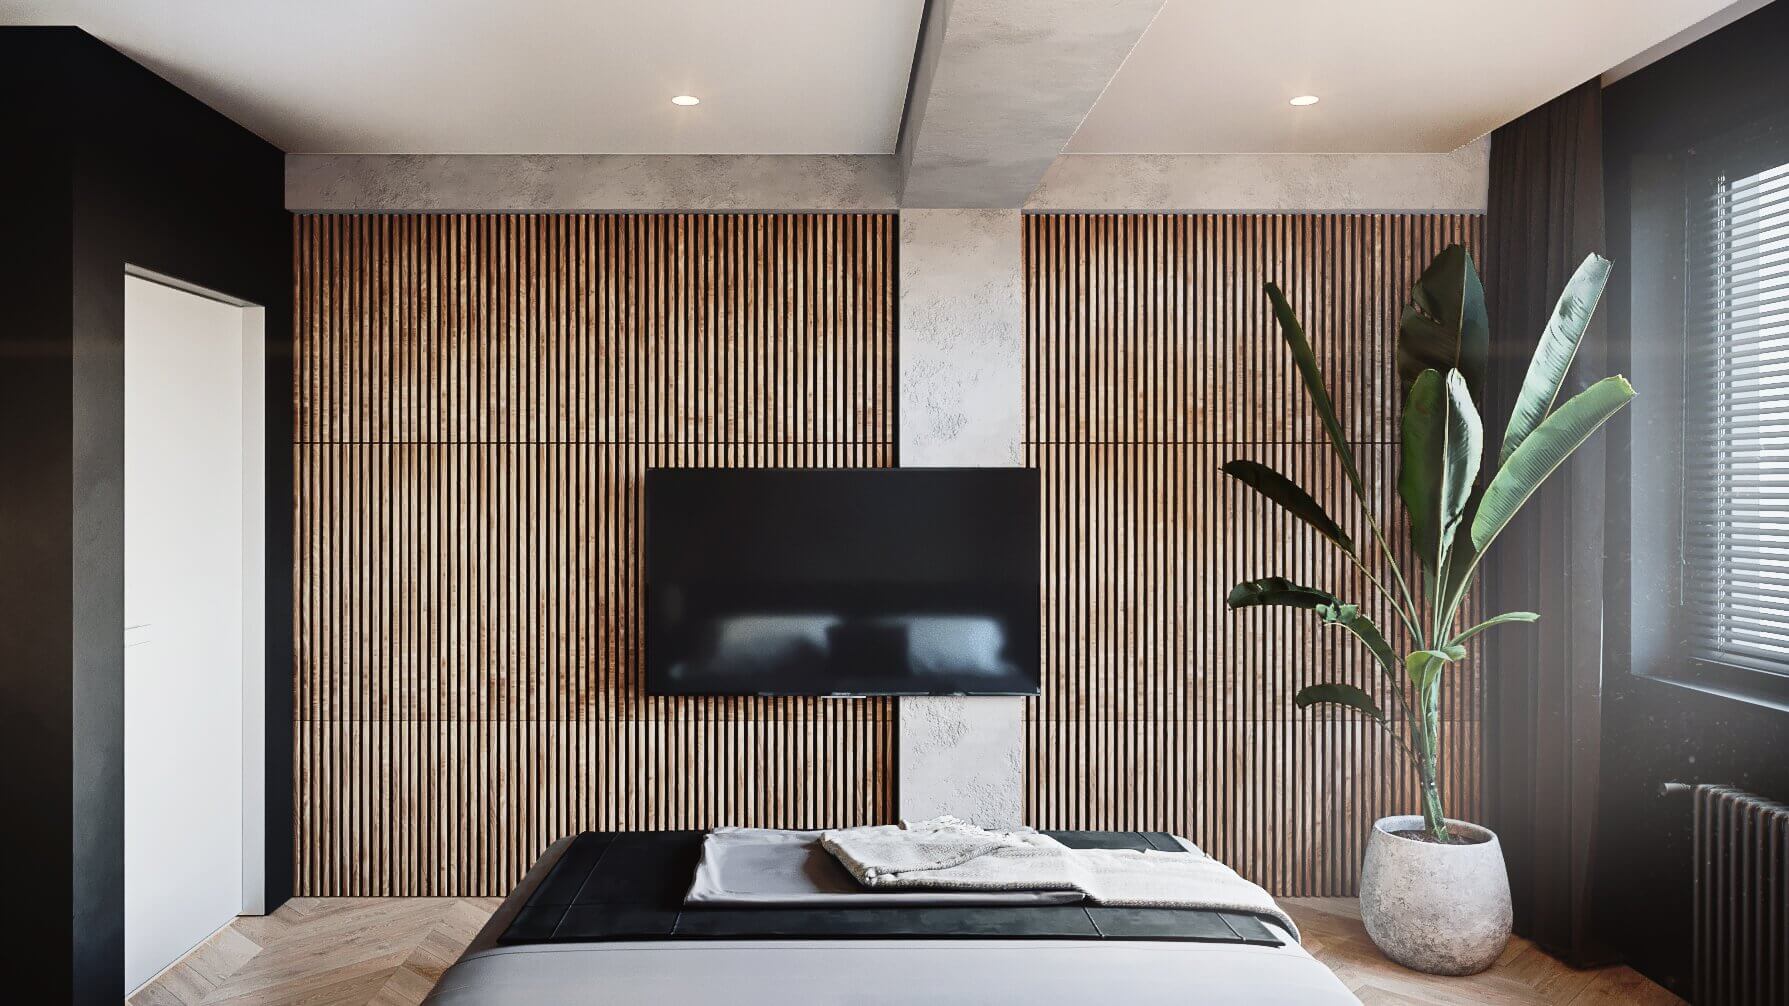 Nest Apartment bedroom design wood wall cladding - cgi visualization